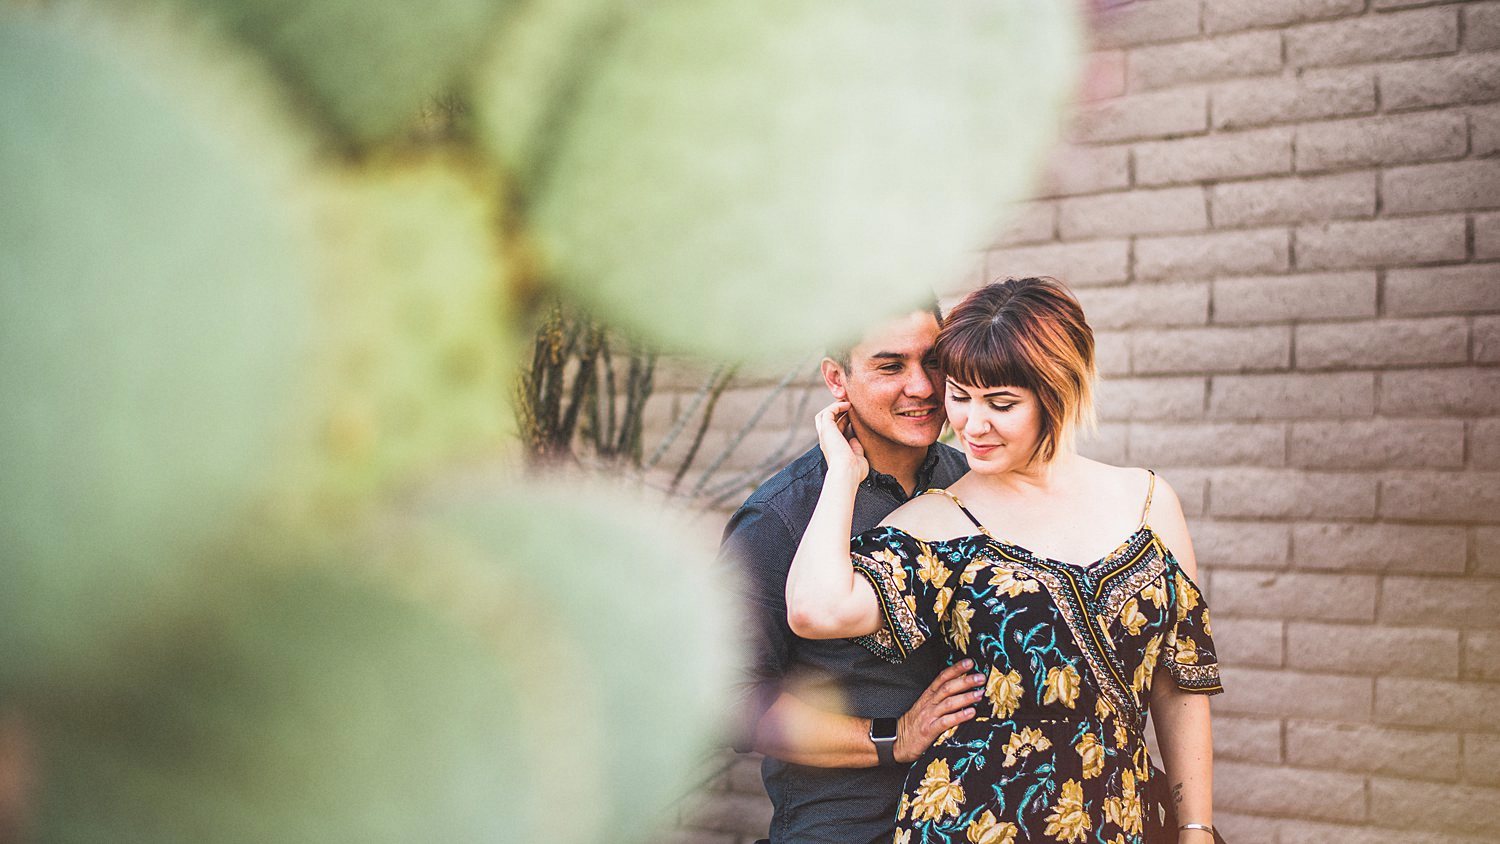 Jess Gable - 54 - Downtown Phoenix Engagement Session by Wedding Photographer Ryan Inman.jpg